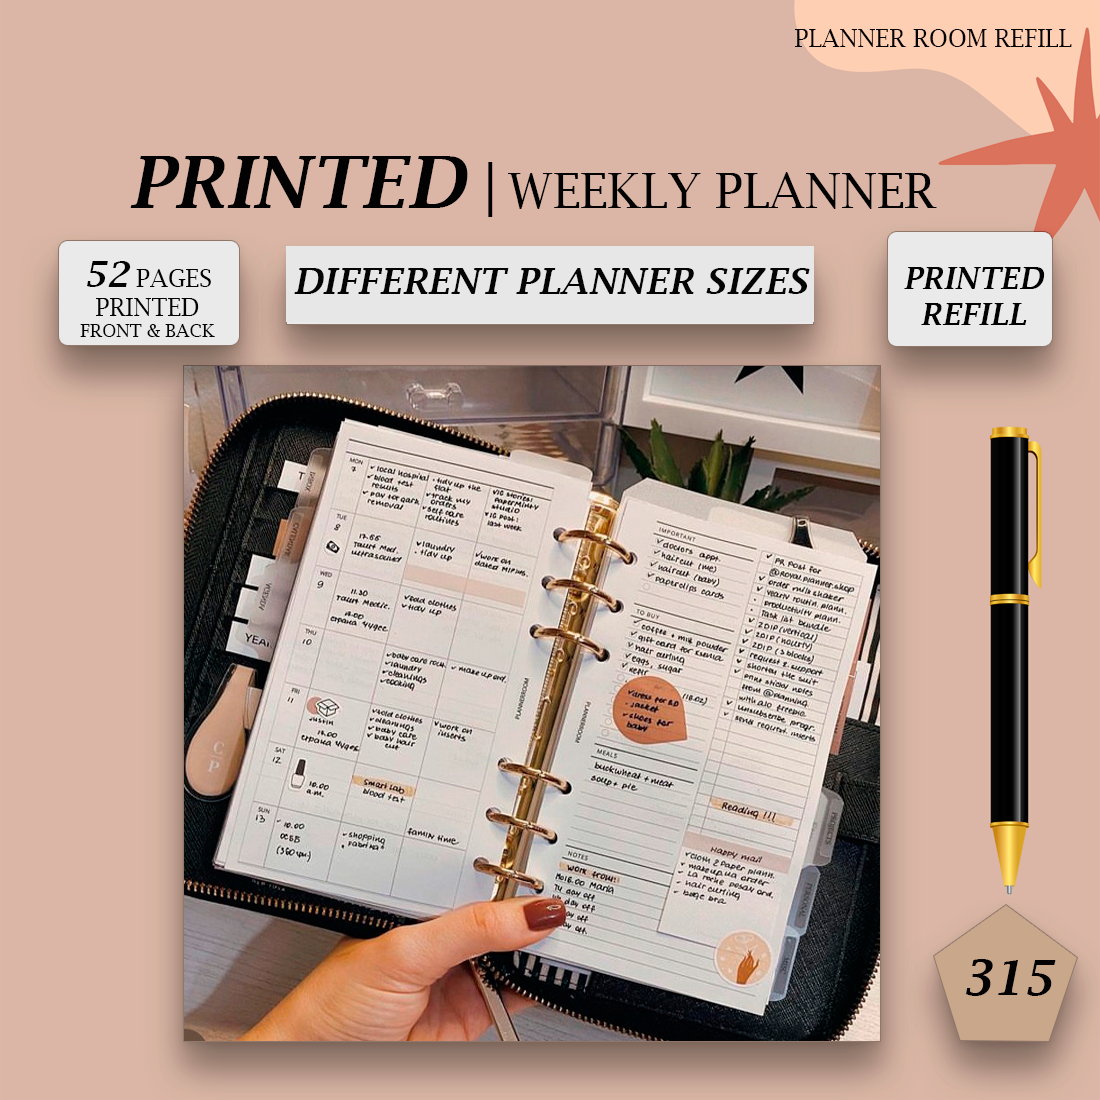 PRINTED weekly planner inserts